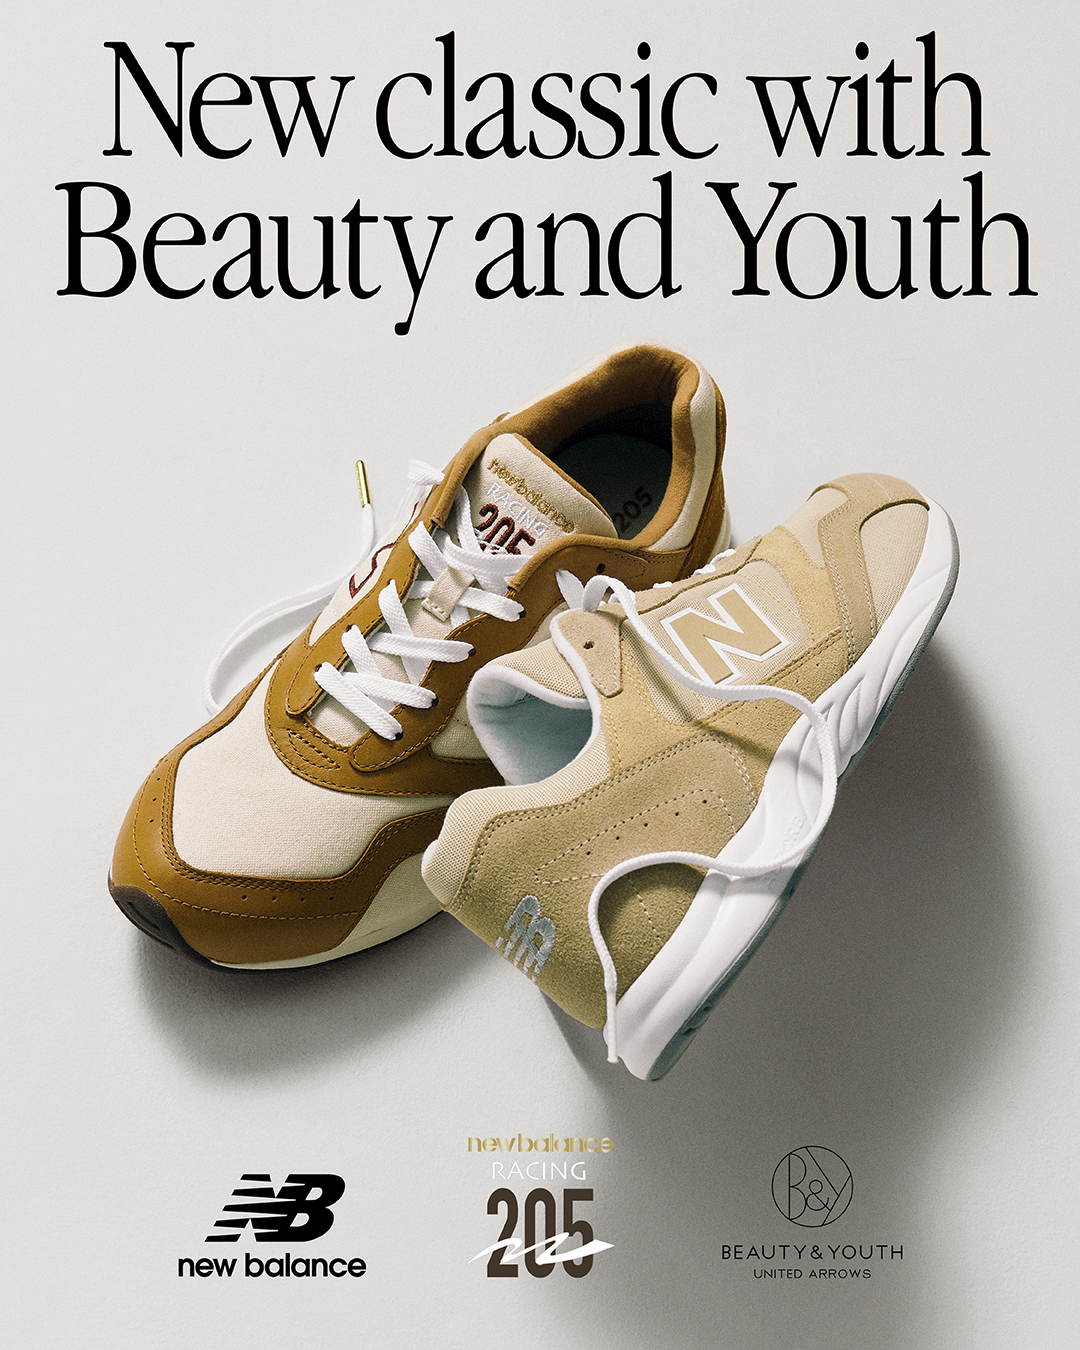 Beauty&Youth United Arrows × New Balance | THOUSAND